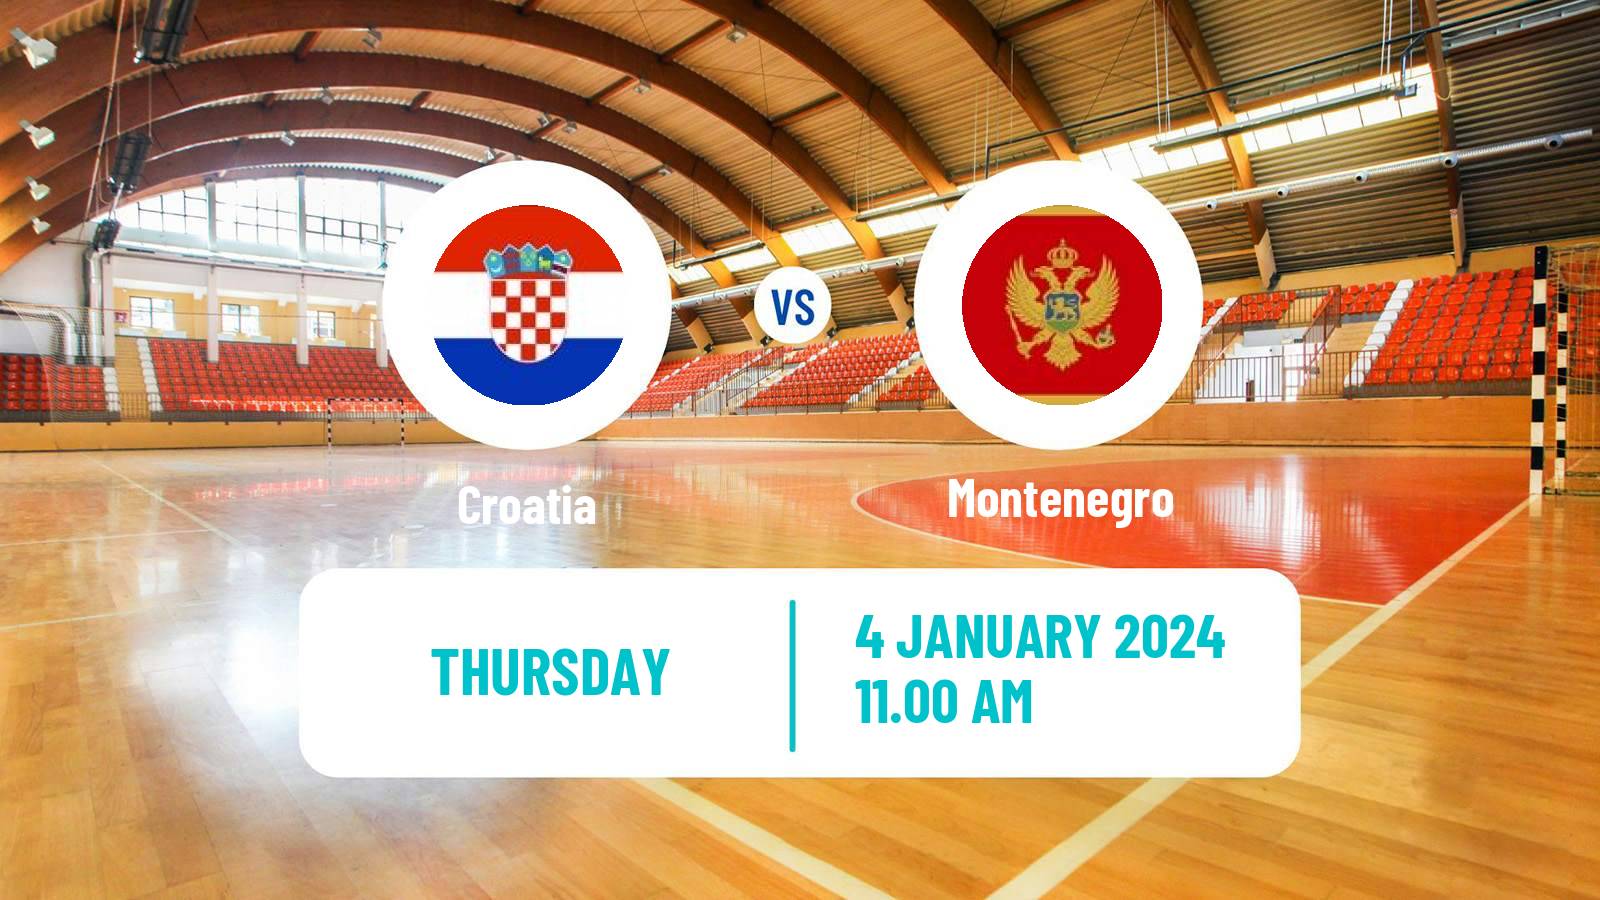 Handball Friendly International Handball Croatia - Montenegro